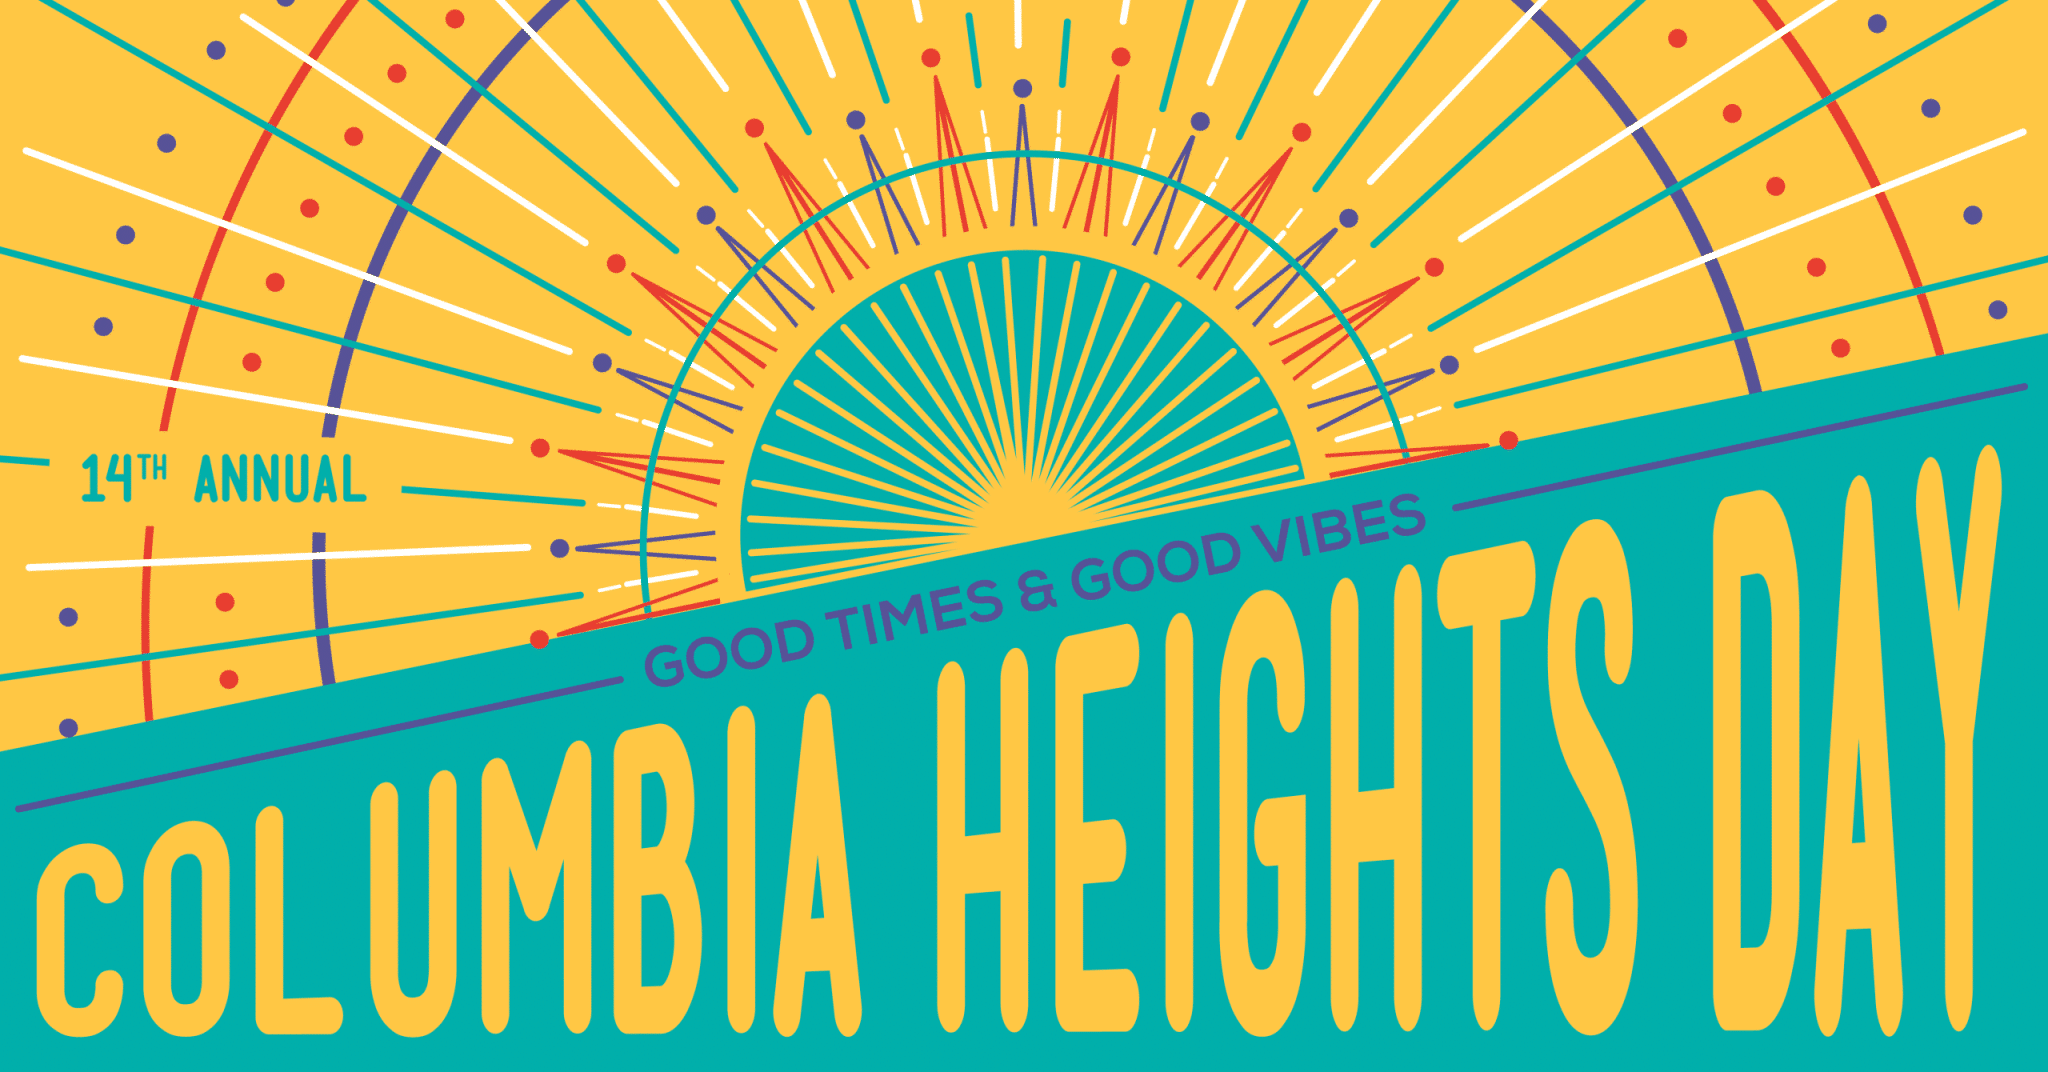 Columbia Heights Day Button Design Contest District Bridges